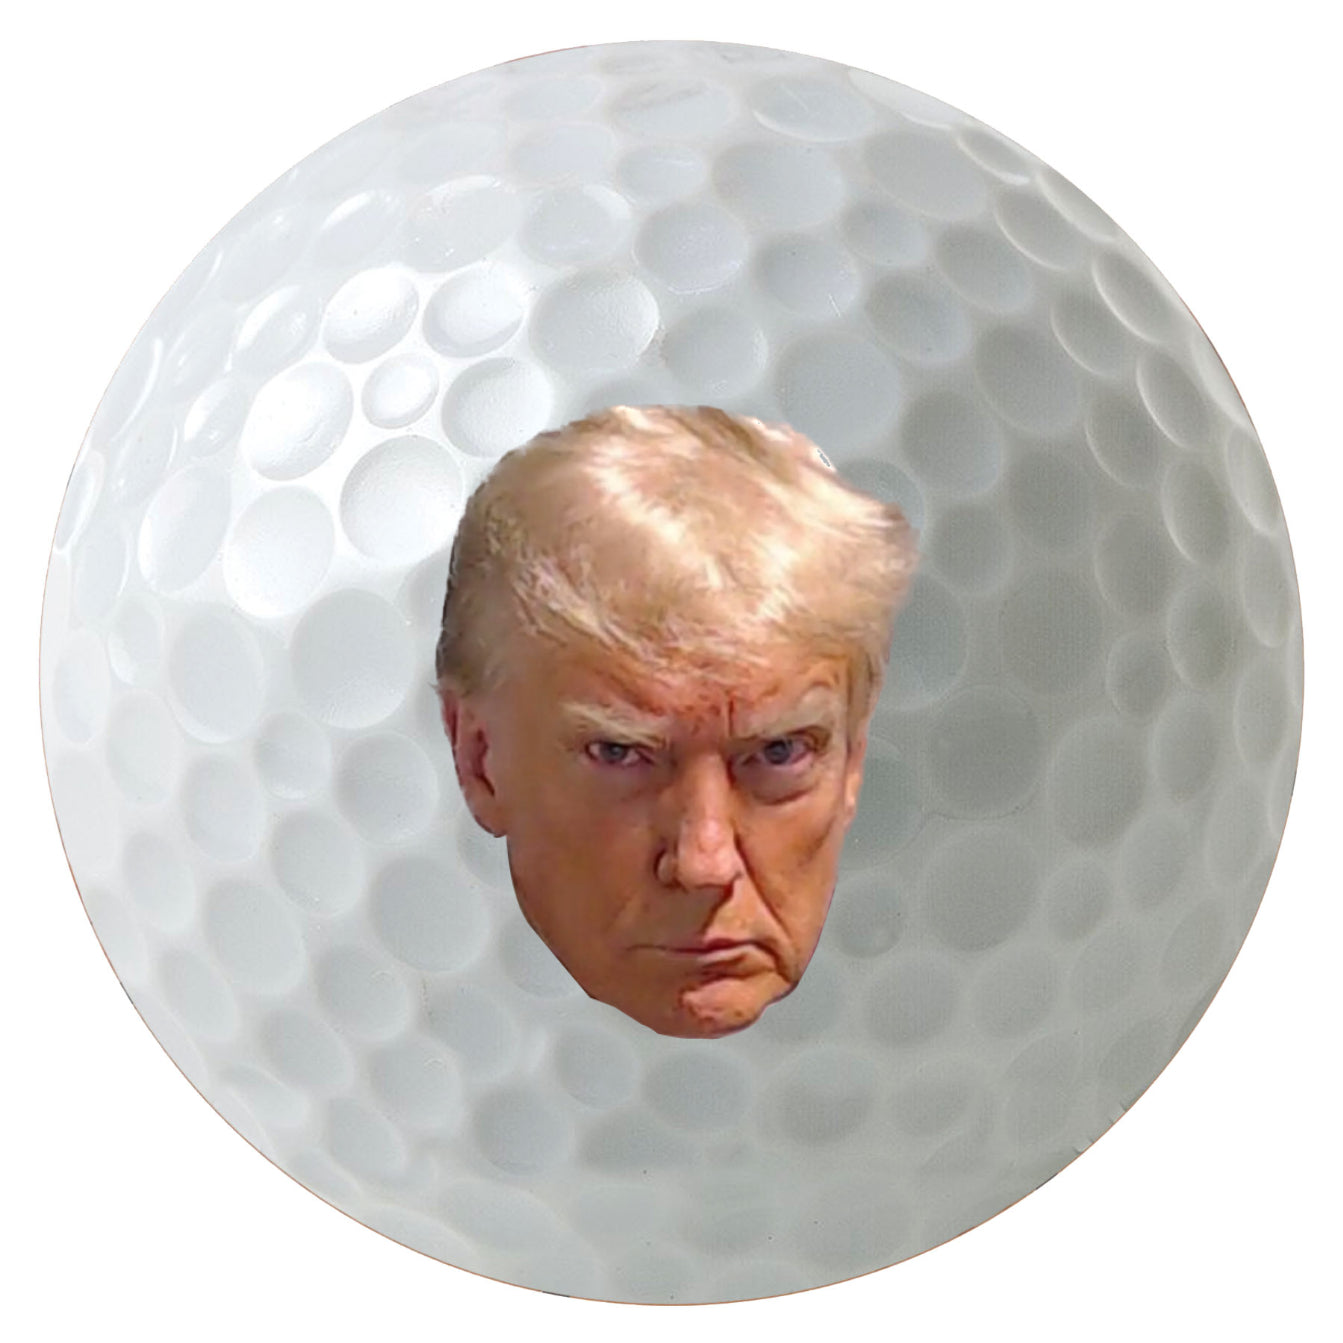 Trump Mugshot Face 3-Pack Printed White Golf Balls